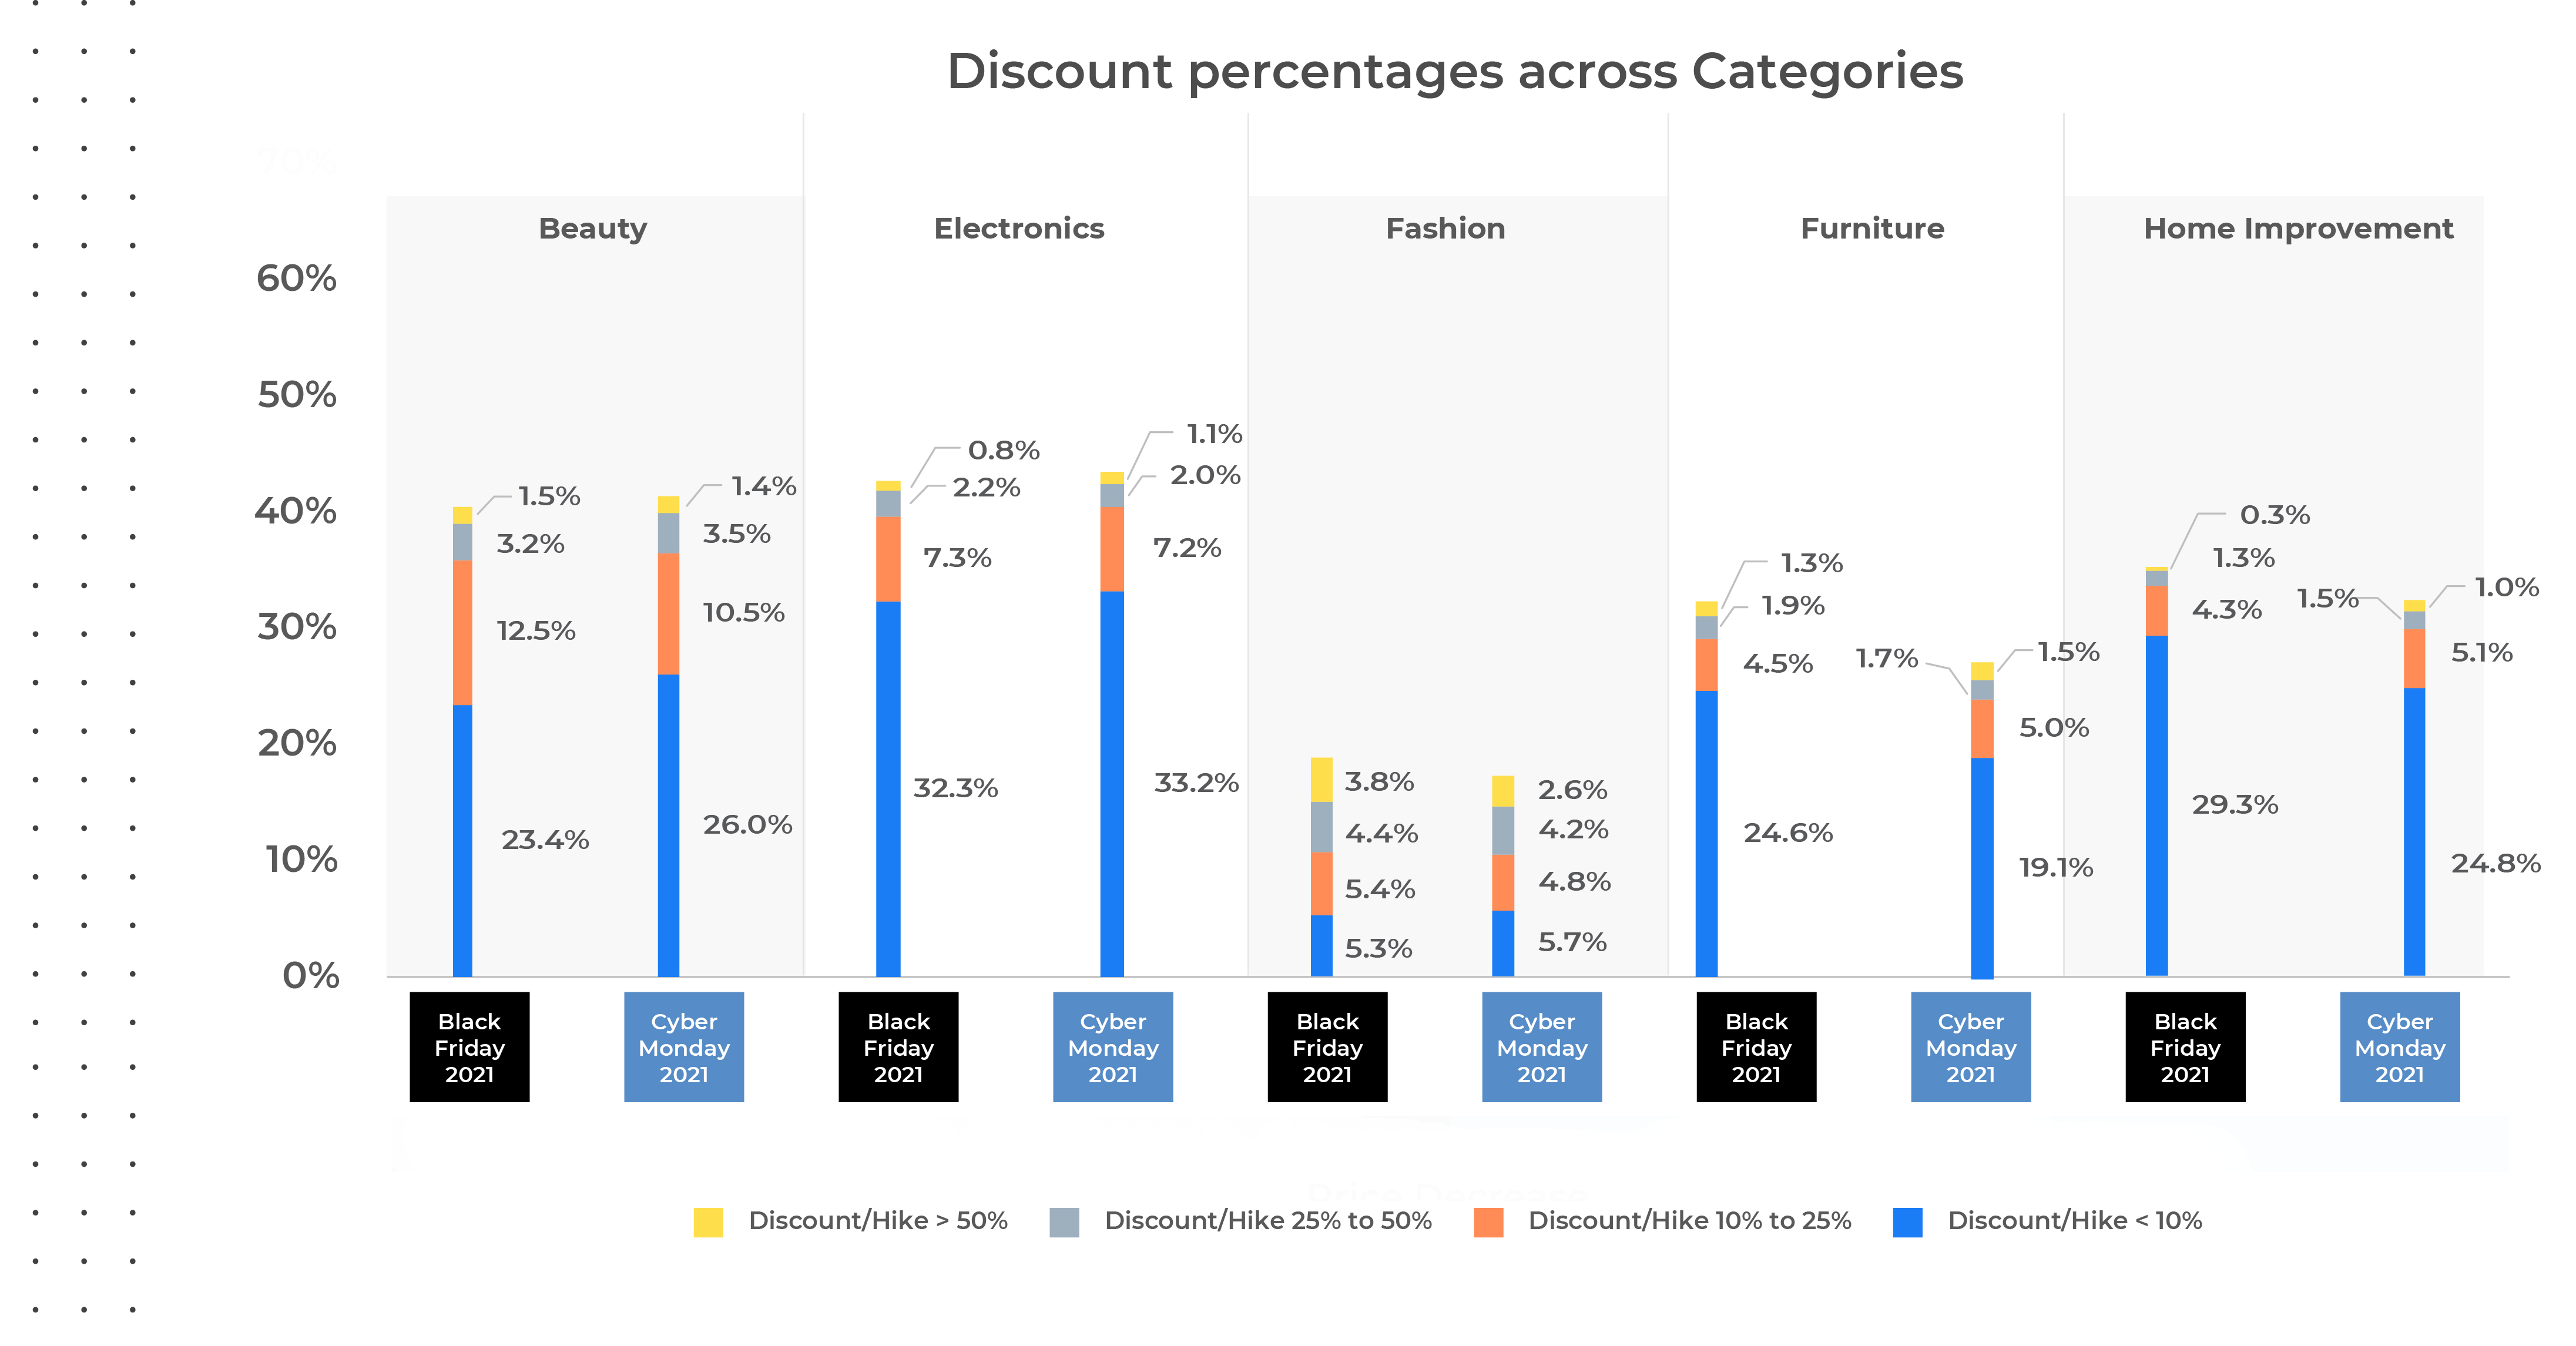 Discount percentages across categories